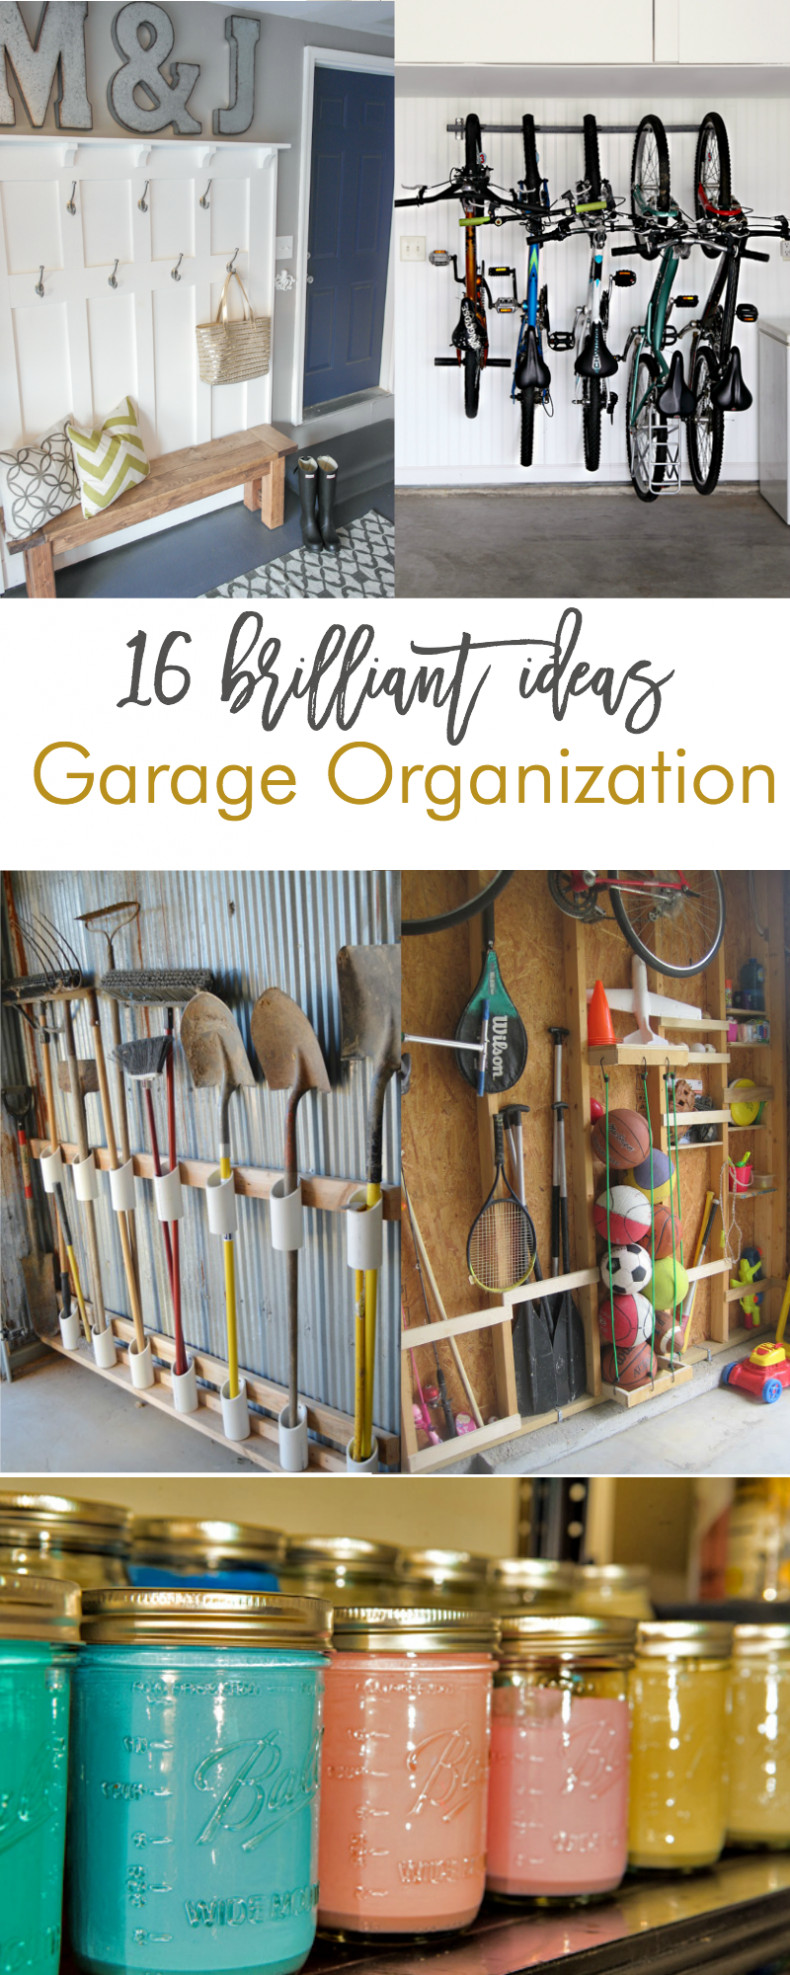 Best ideas about DIY Workshop Plans
. Save or Pin 16 Brilliant DIY Garage Organization Ideas Now.